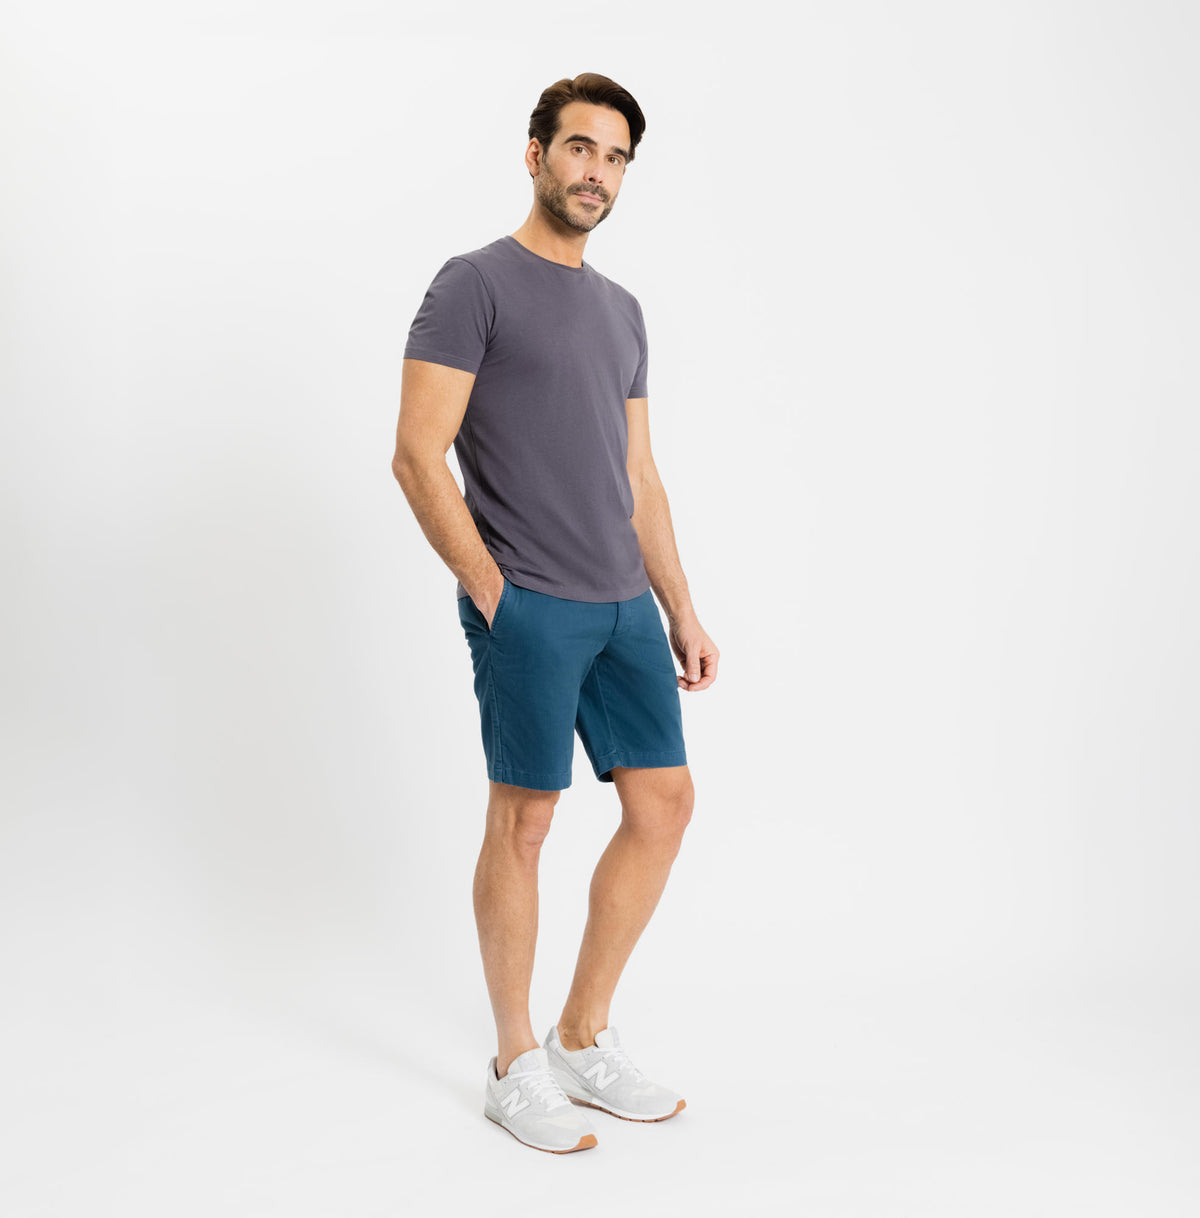 SPOKE Hero Shorts - Petrol Custom Fit Shorts - SPOKE